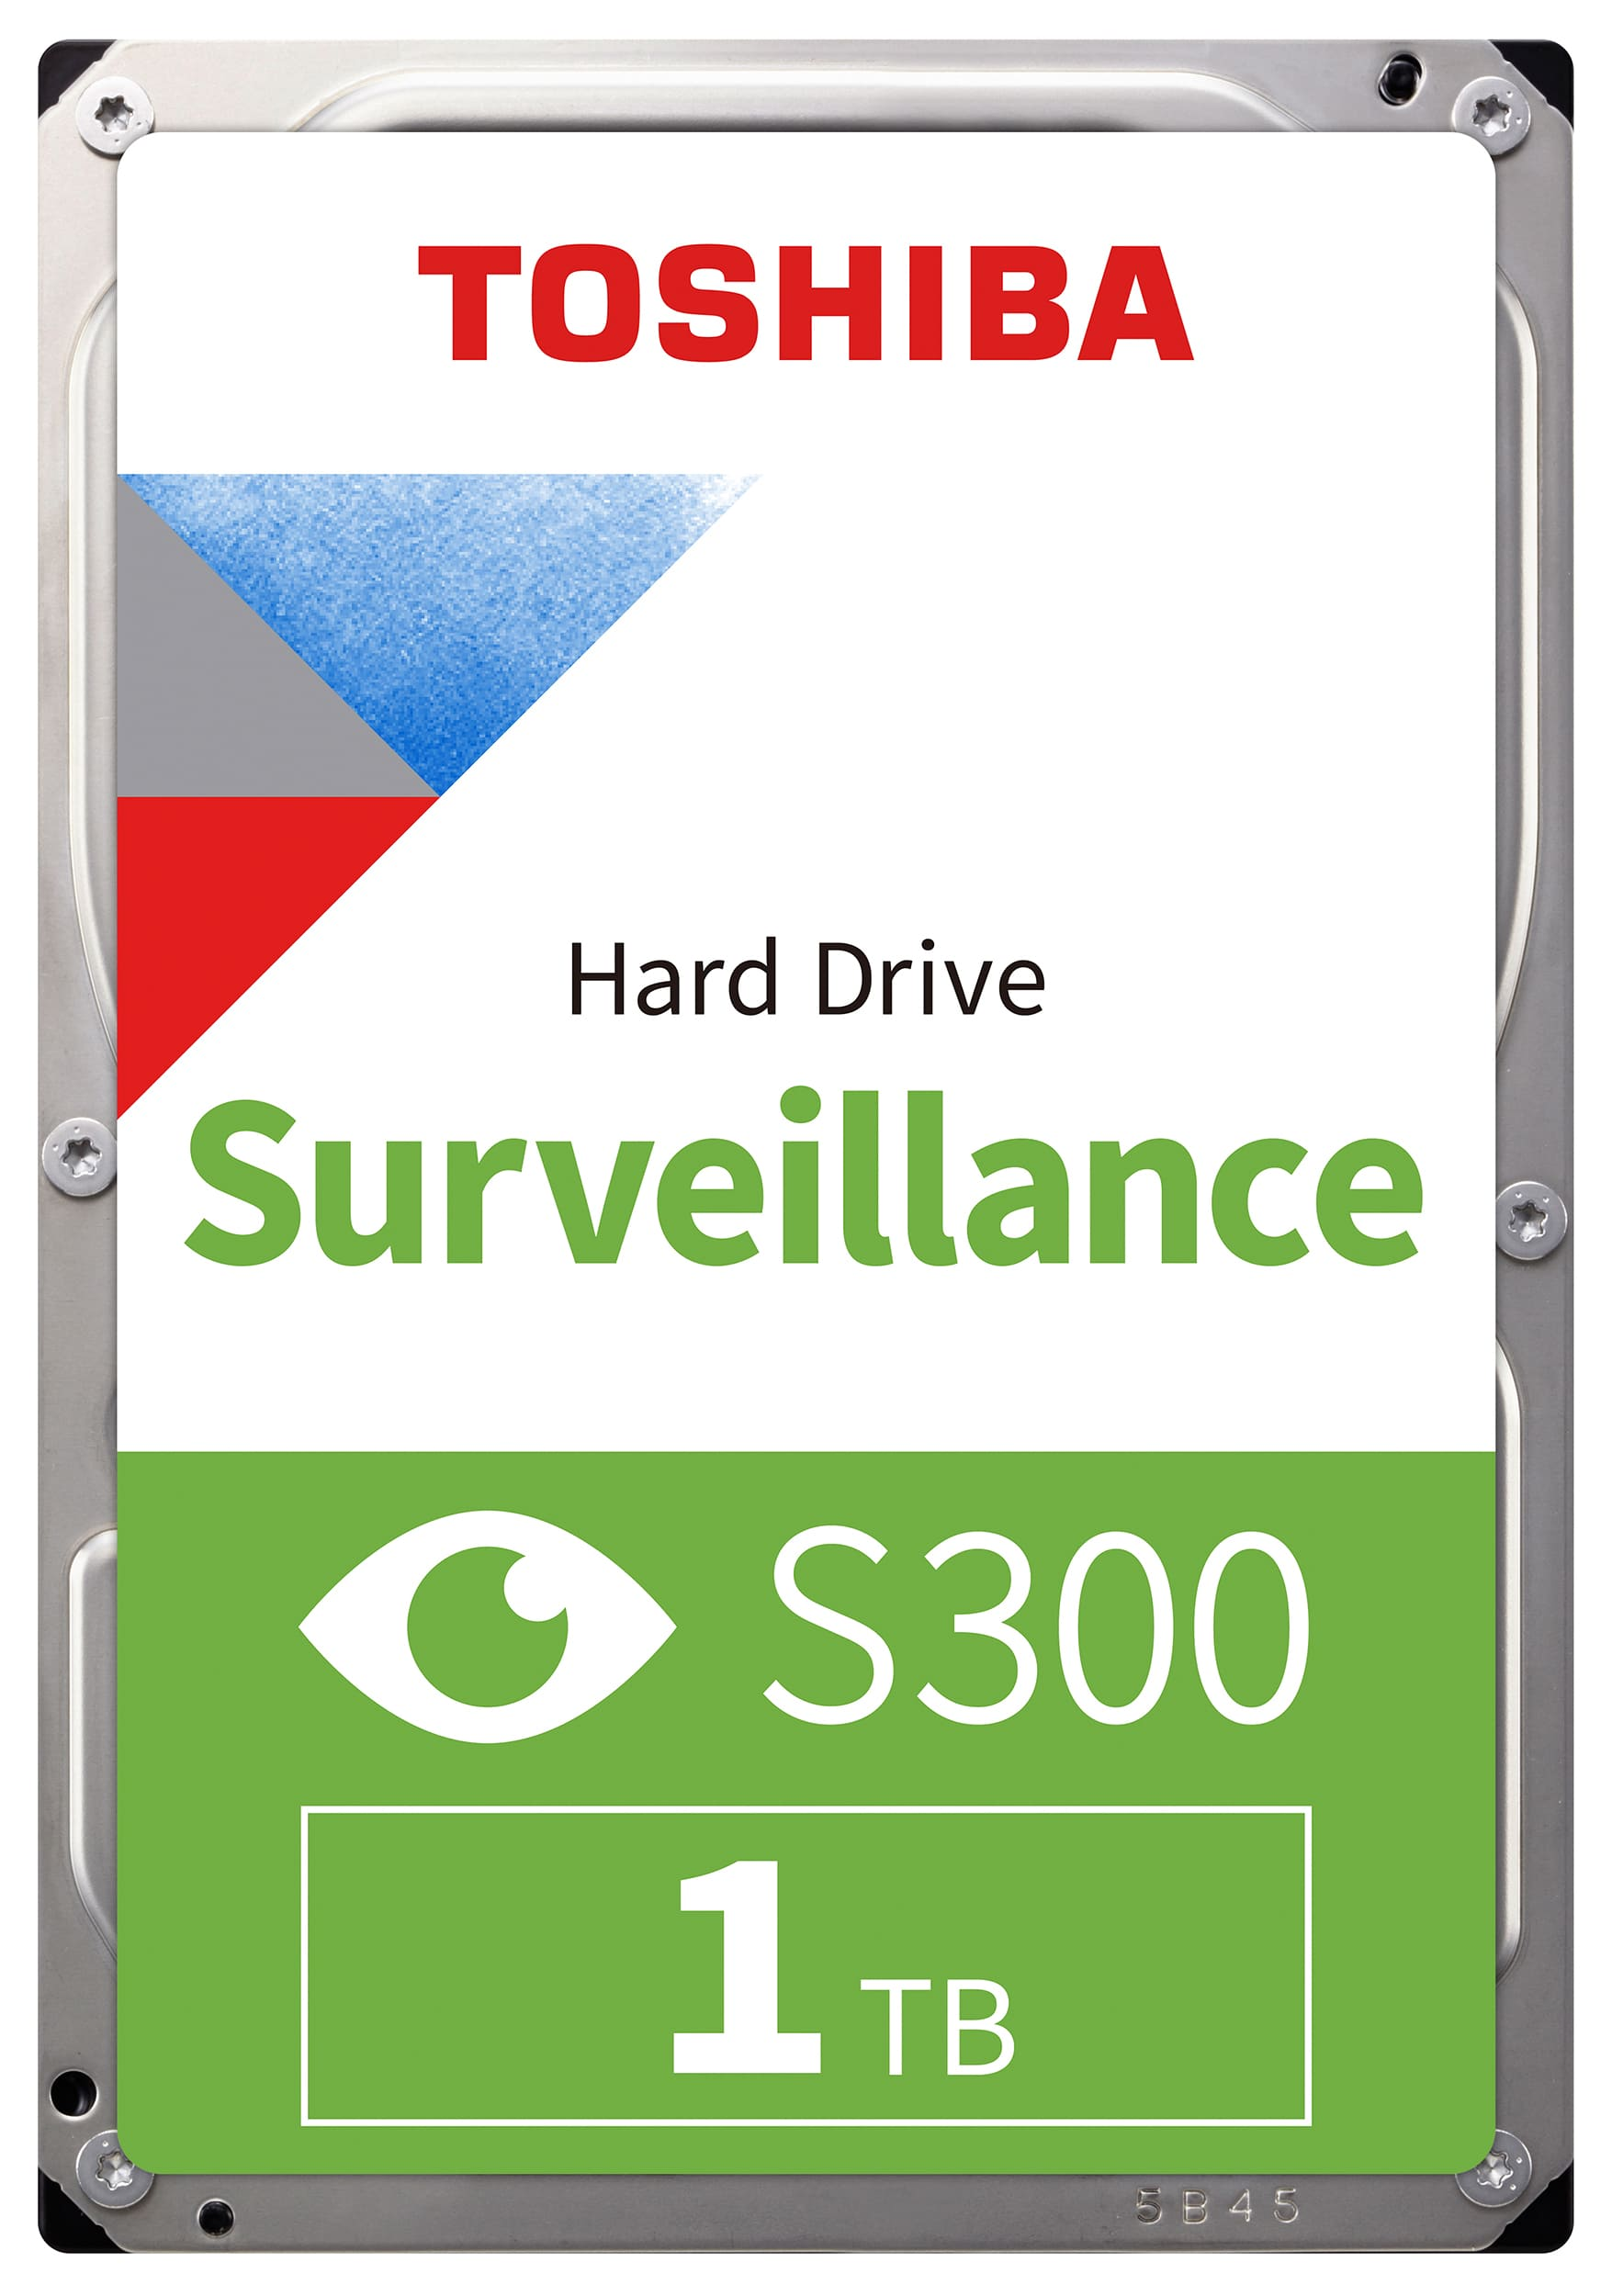 intern TOSHIBA HDD, GB, S300 1000 Surveillance,